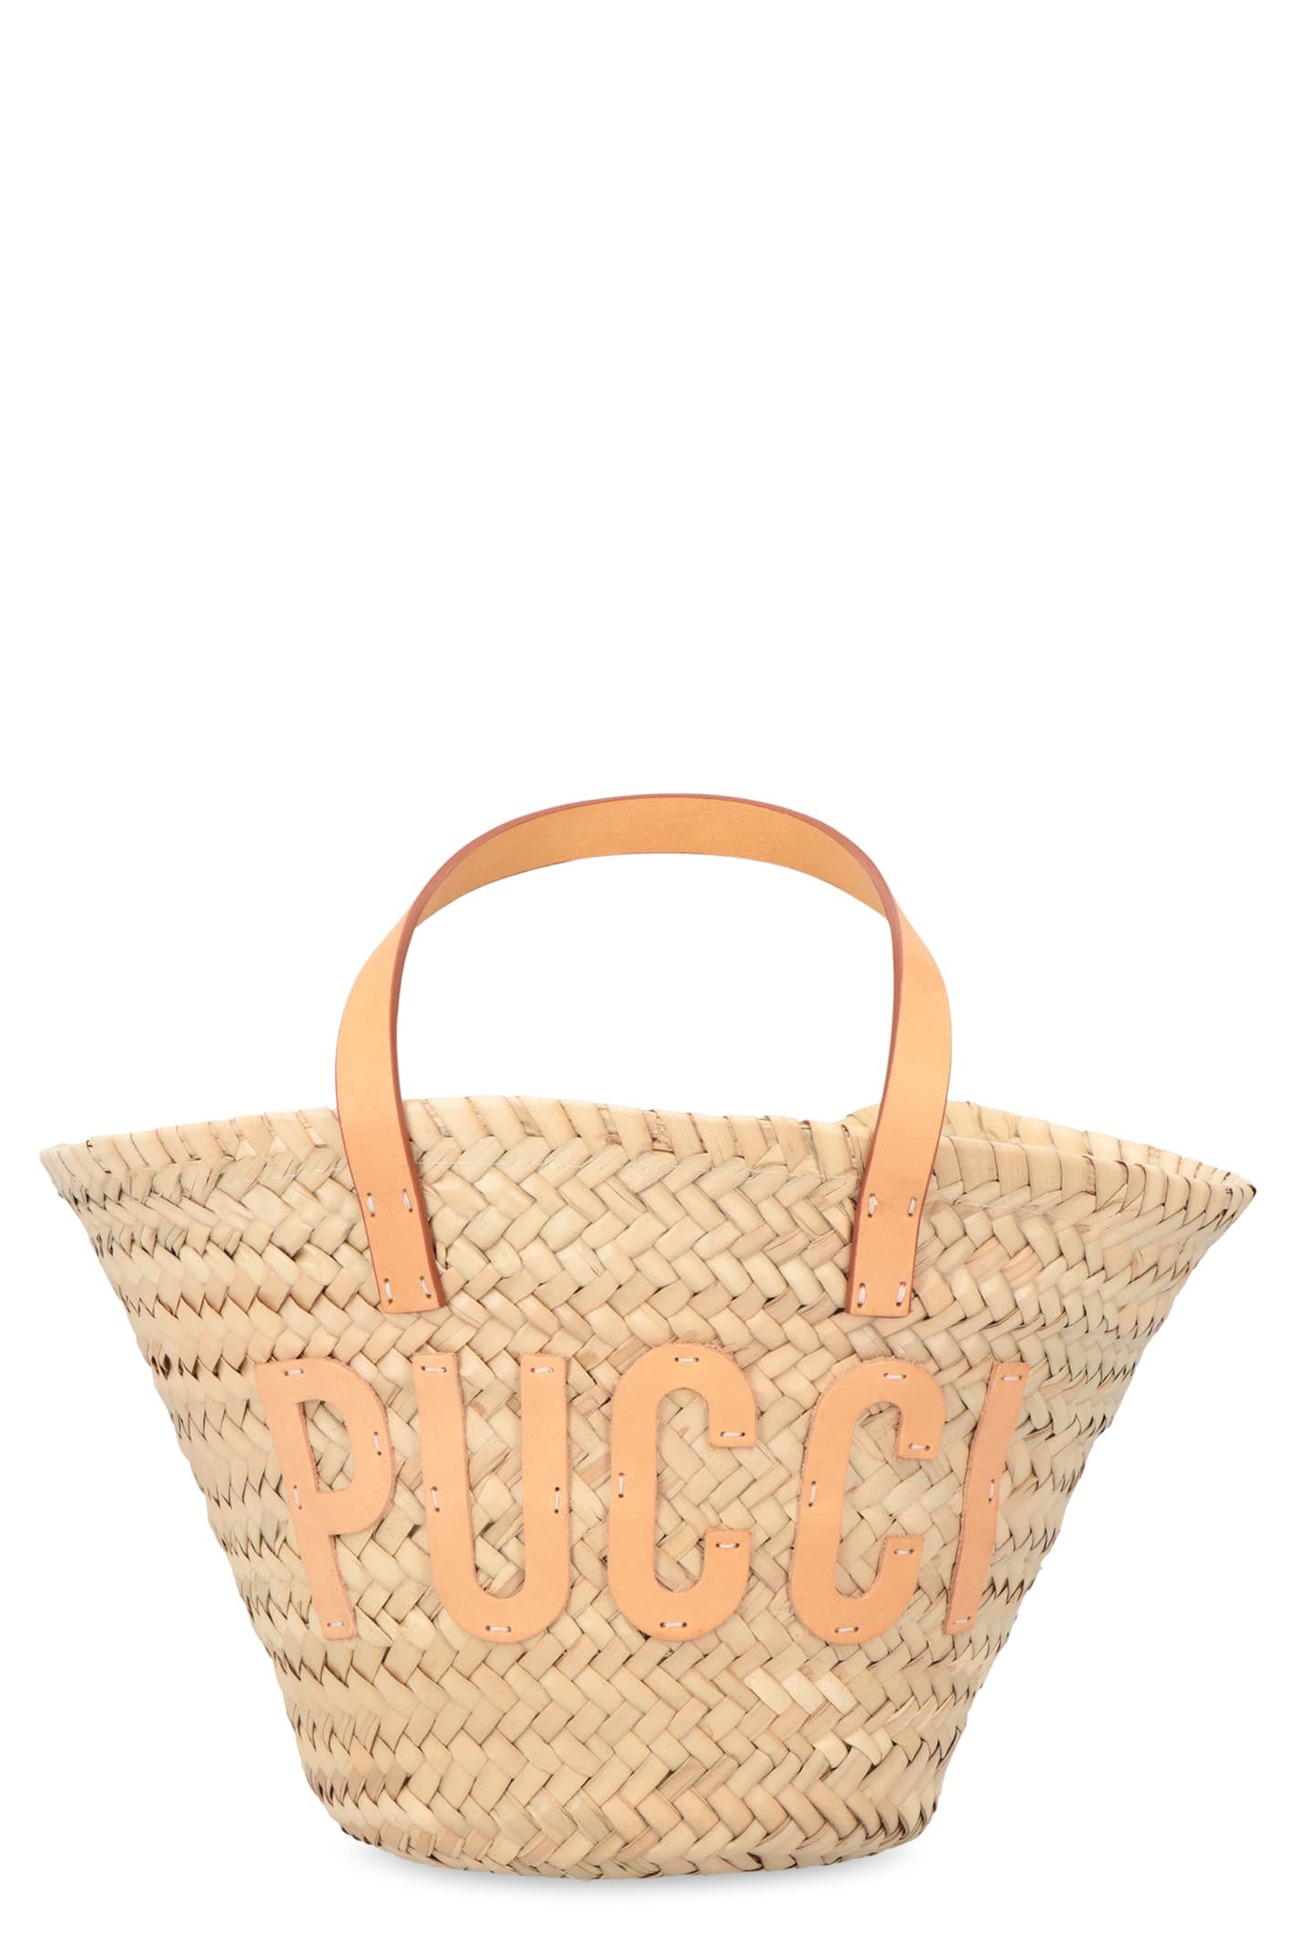 Emilio Pucci Mini Bucket Bag in natural